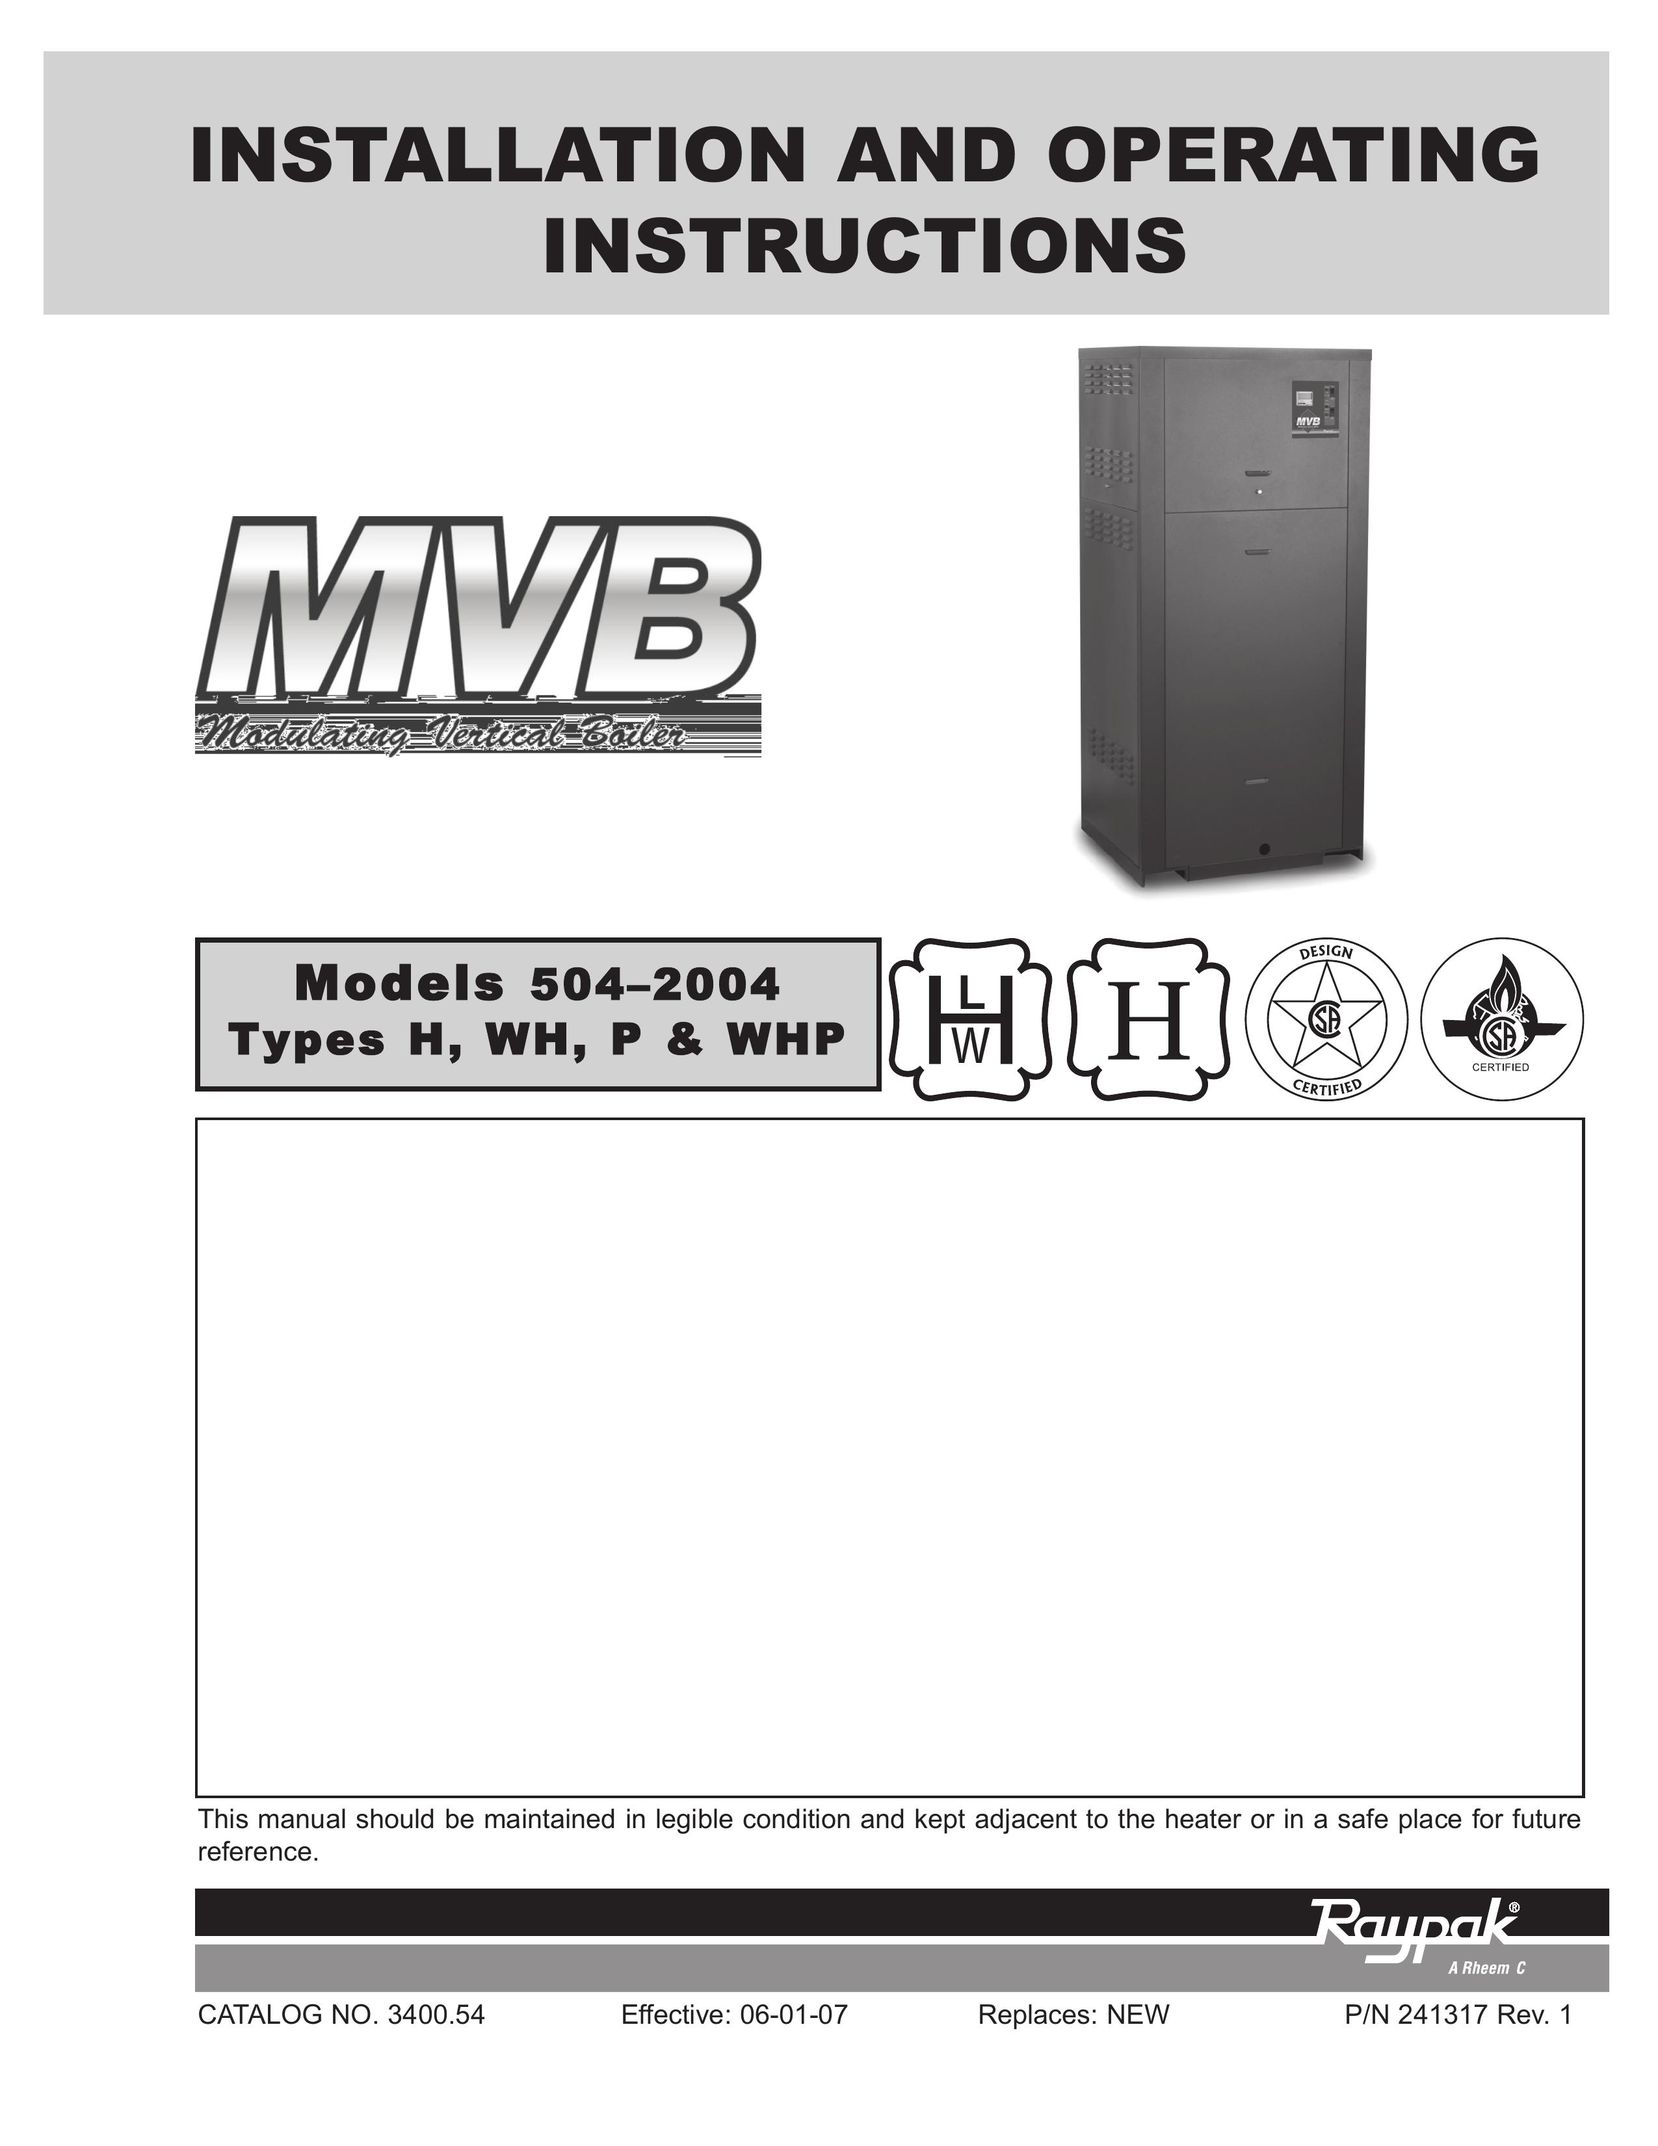 Raypak 504-2004 Water Heater User Manual